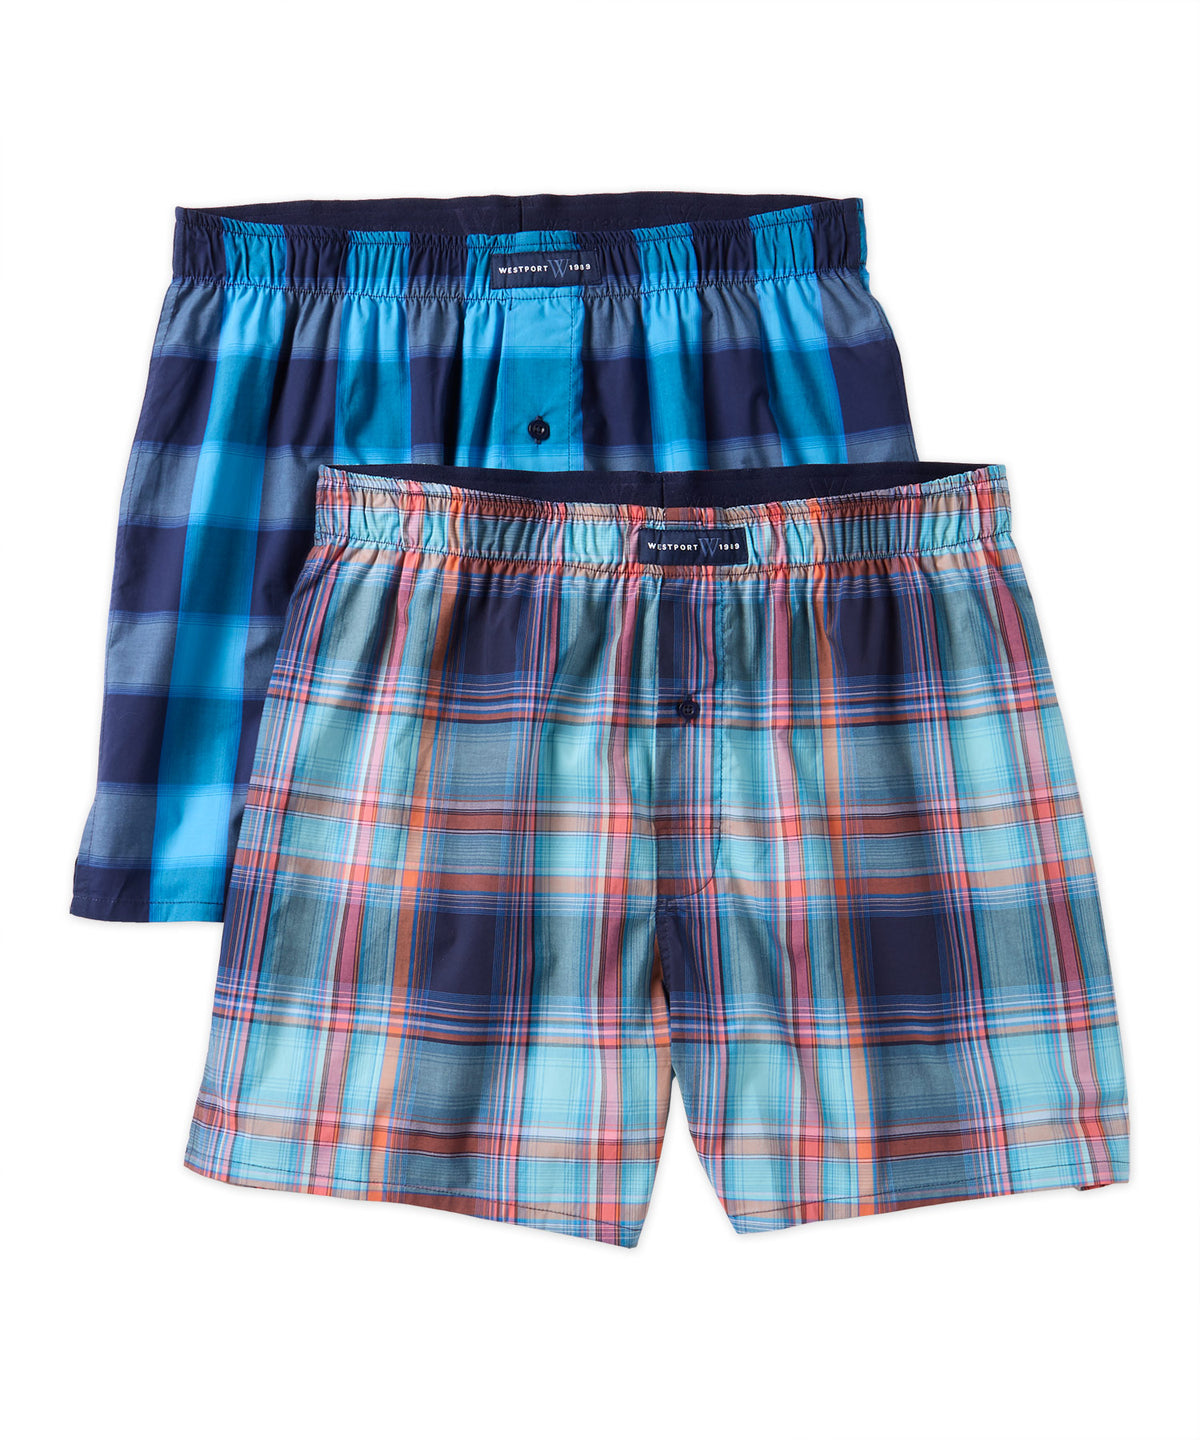 Buy Lucky Brand Men's Underwear - 100% Cotton Knit Boxers (3 Pack) online